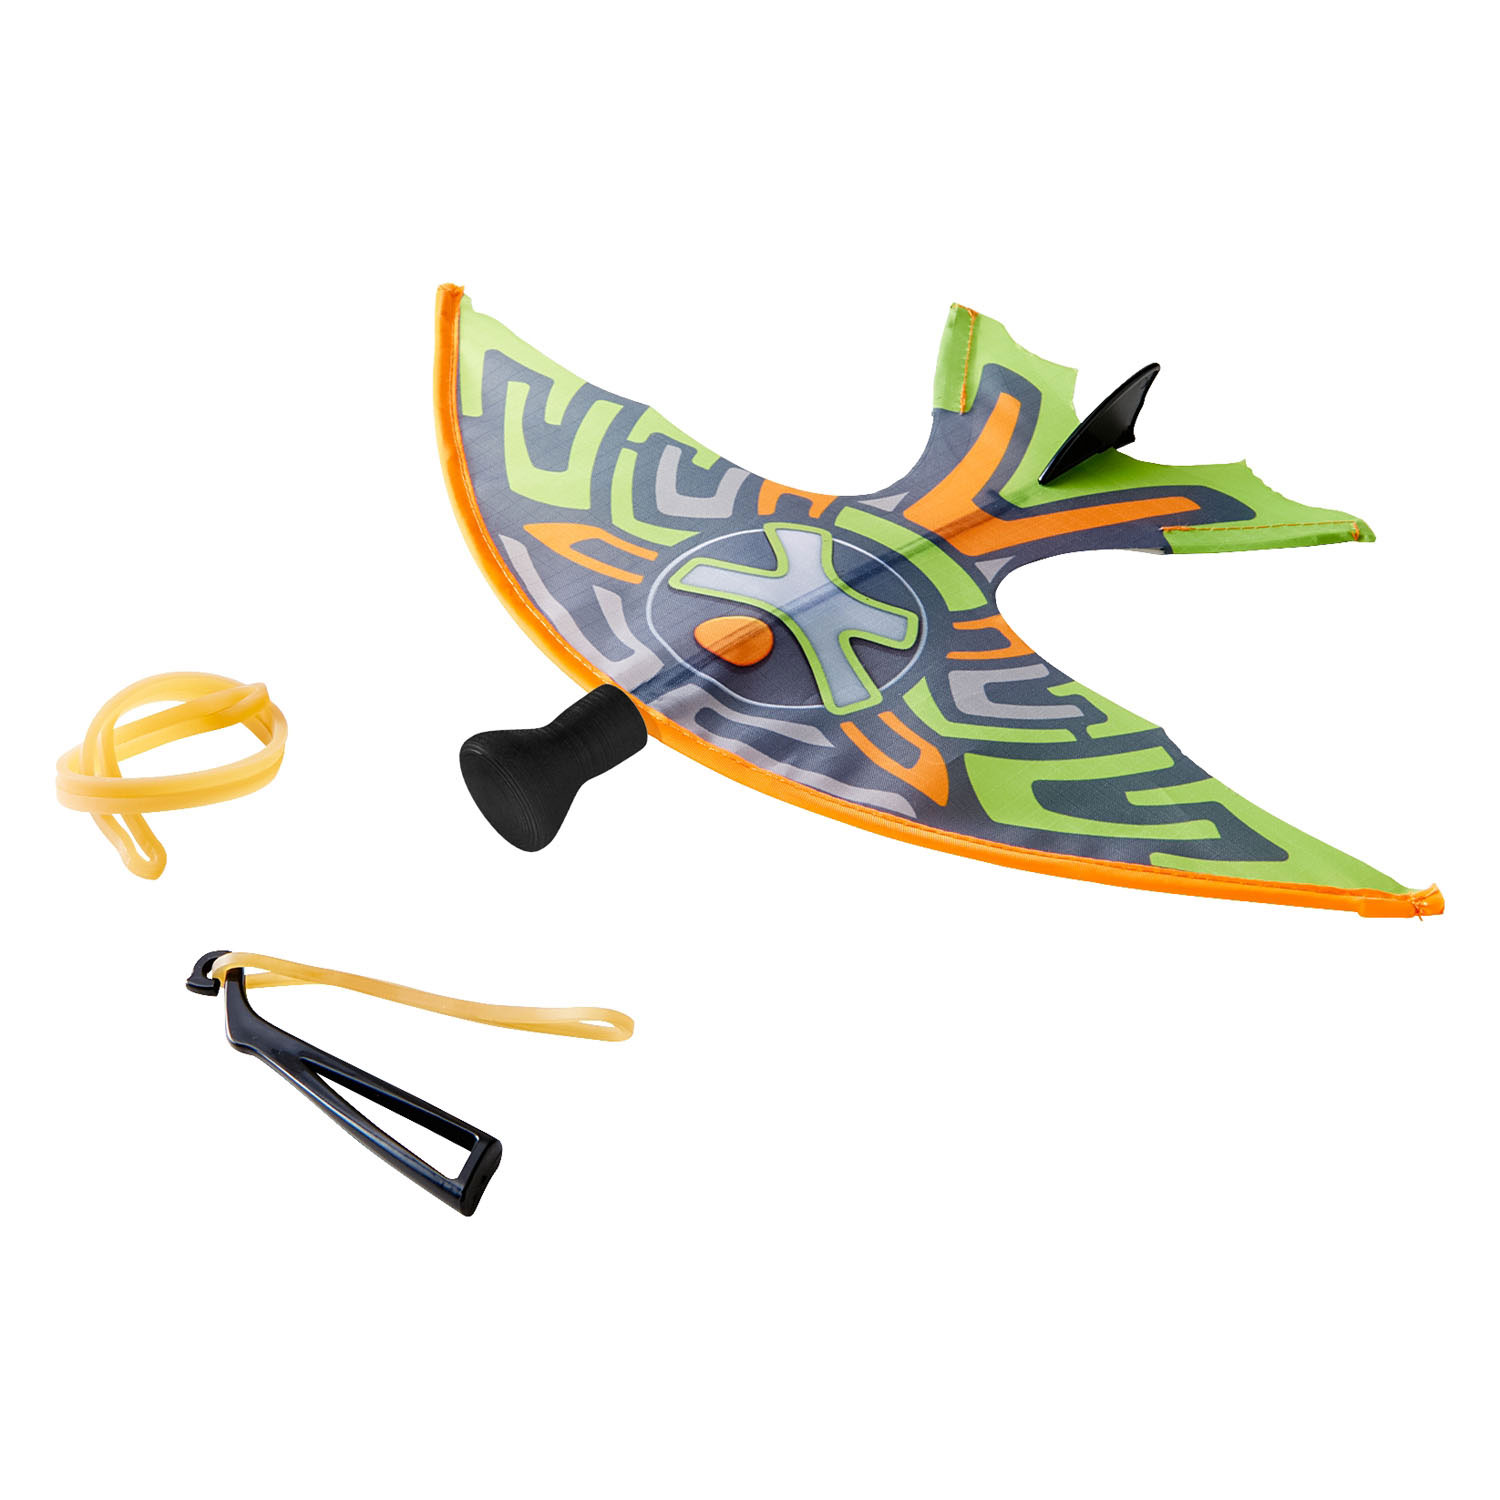 Haba Terra Kids – Katapultflugzeug